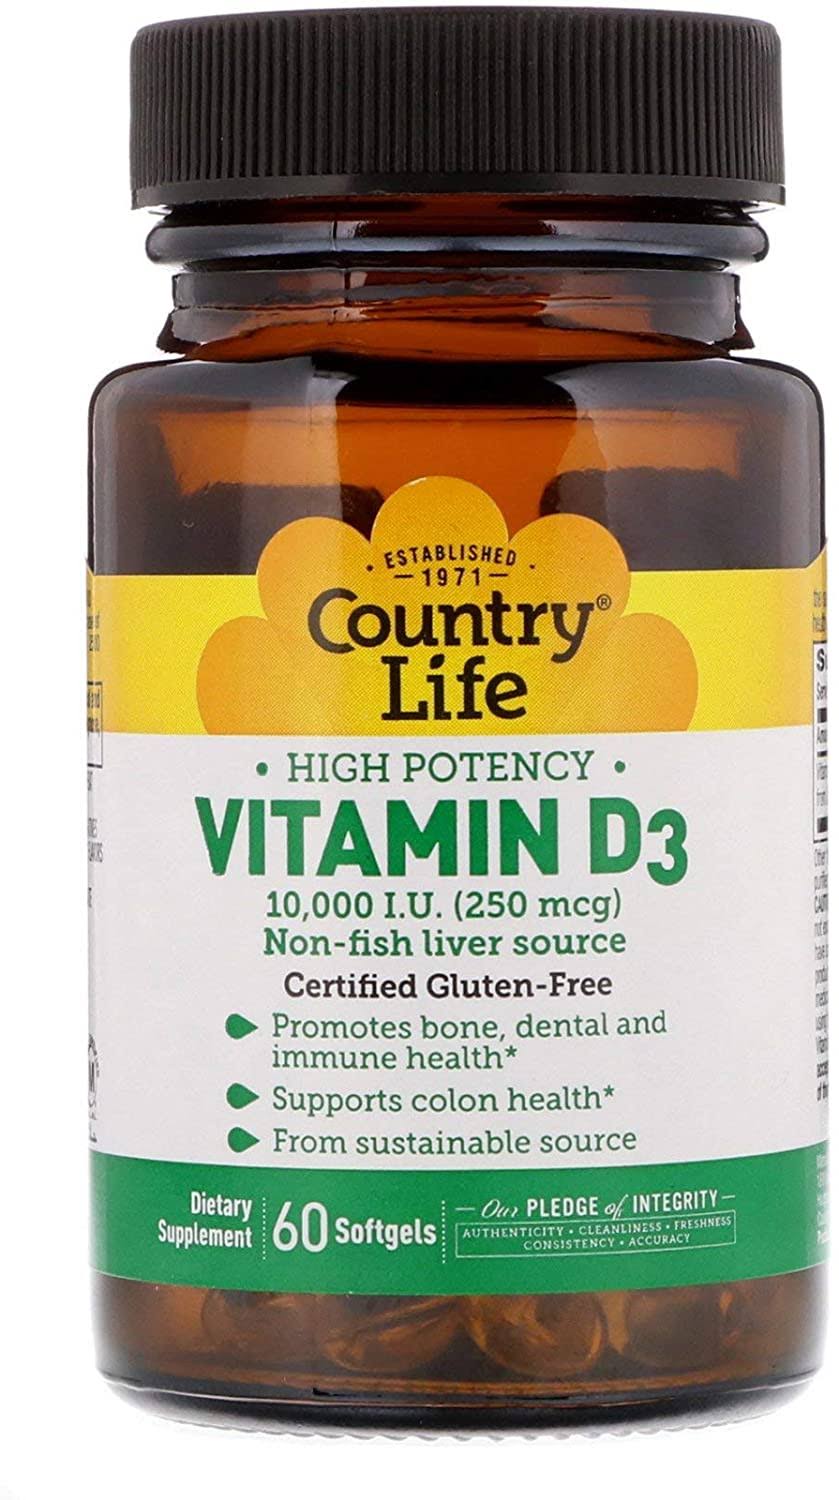 Country Life, Vitamin D3, High Potency, 10,000 I.U., 60 Softgels